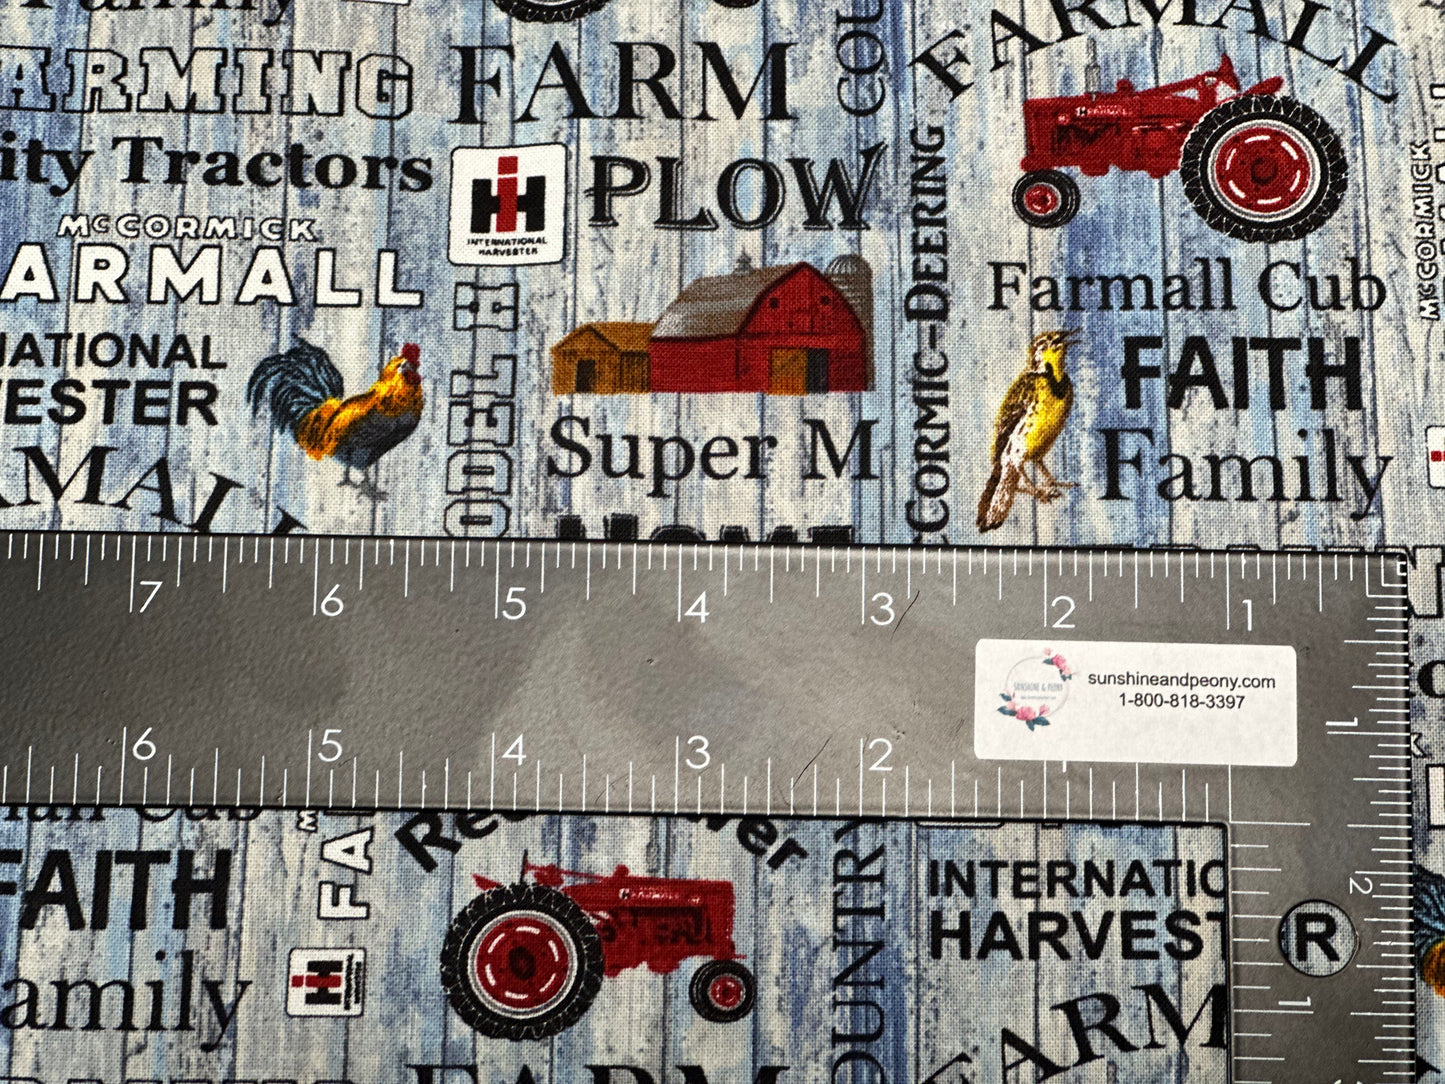 Farmall - Farm Tractors and agricultural phrases